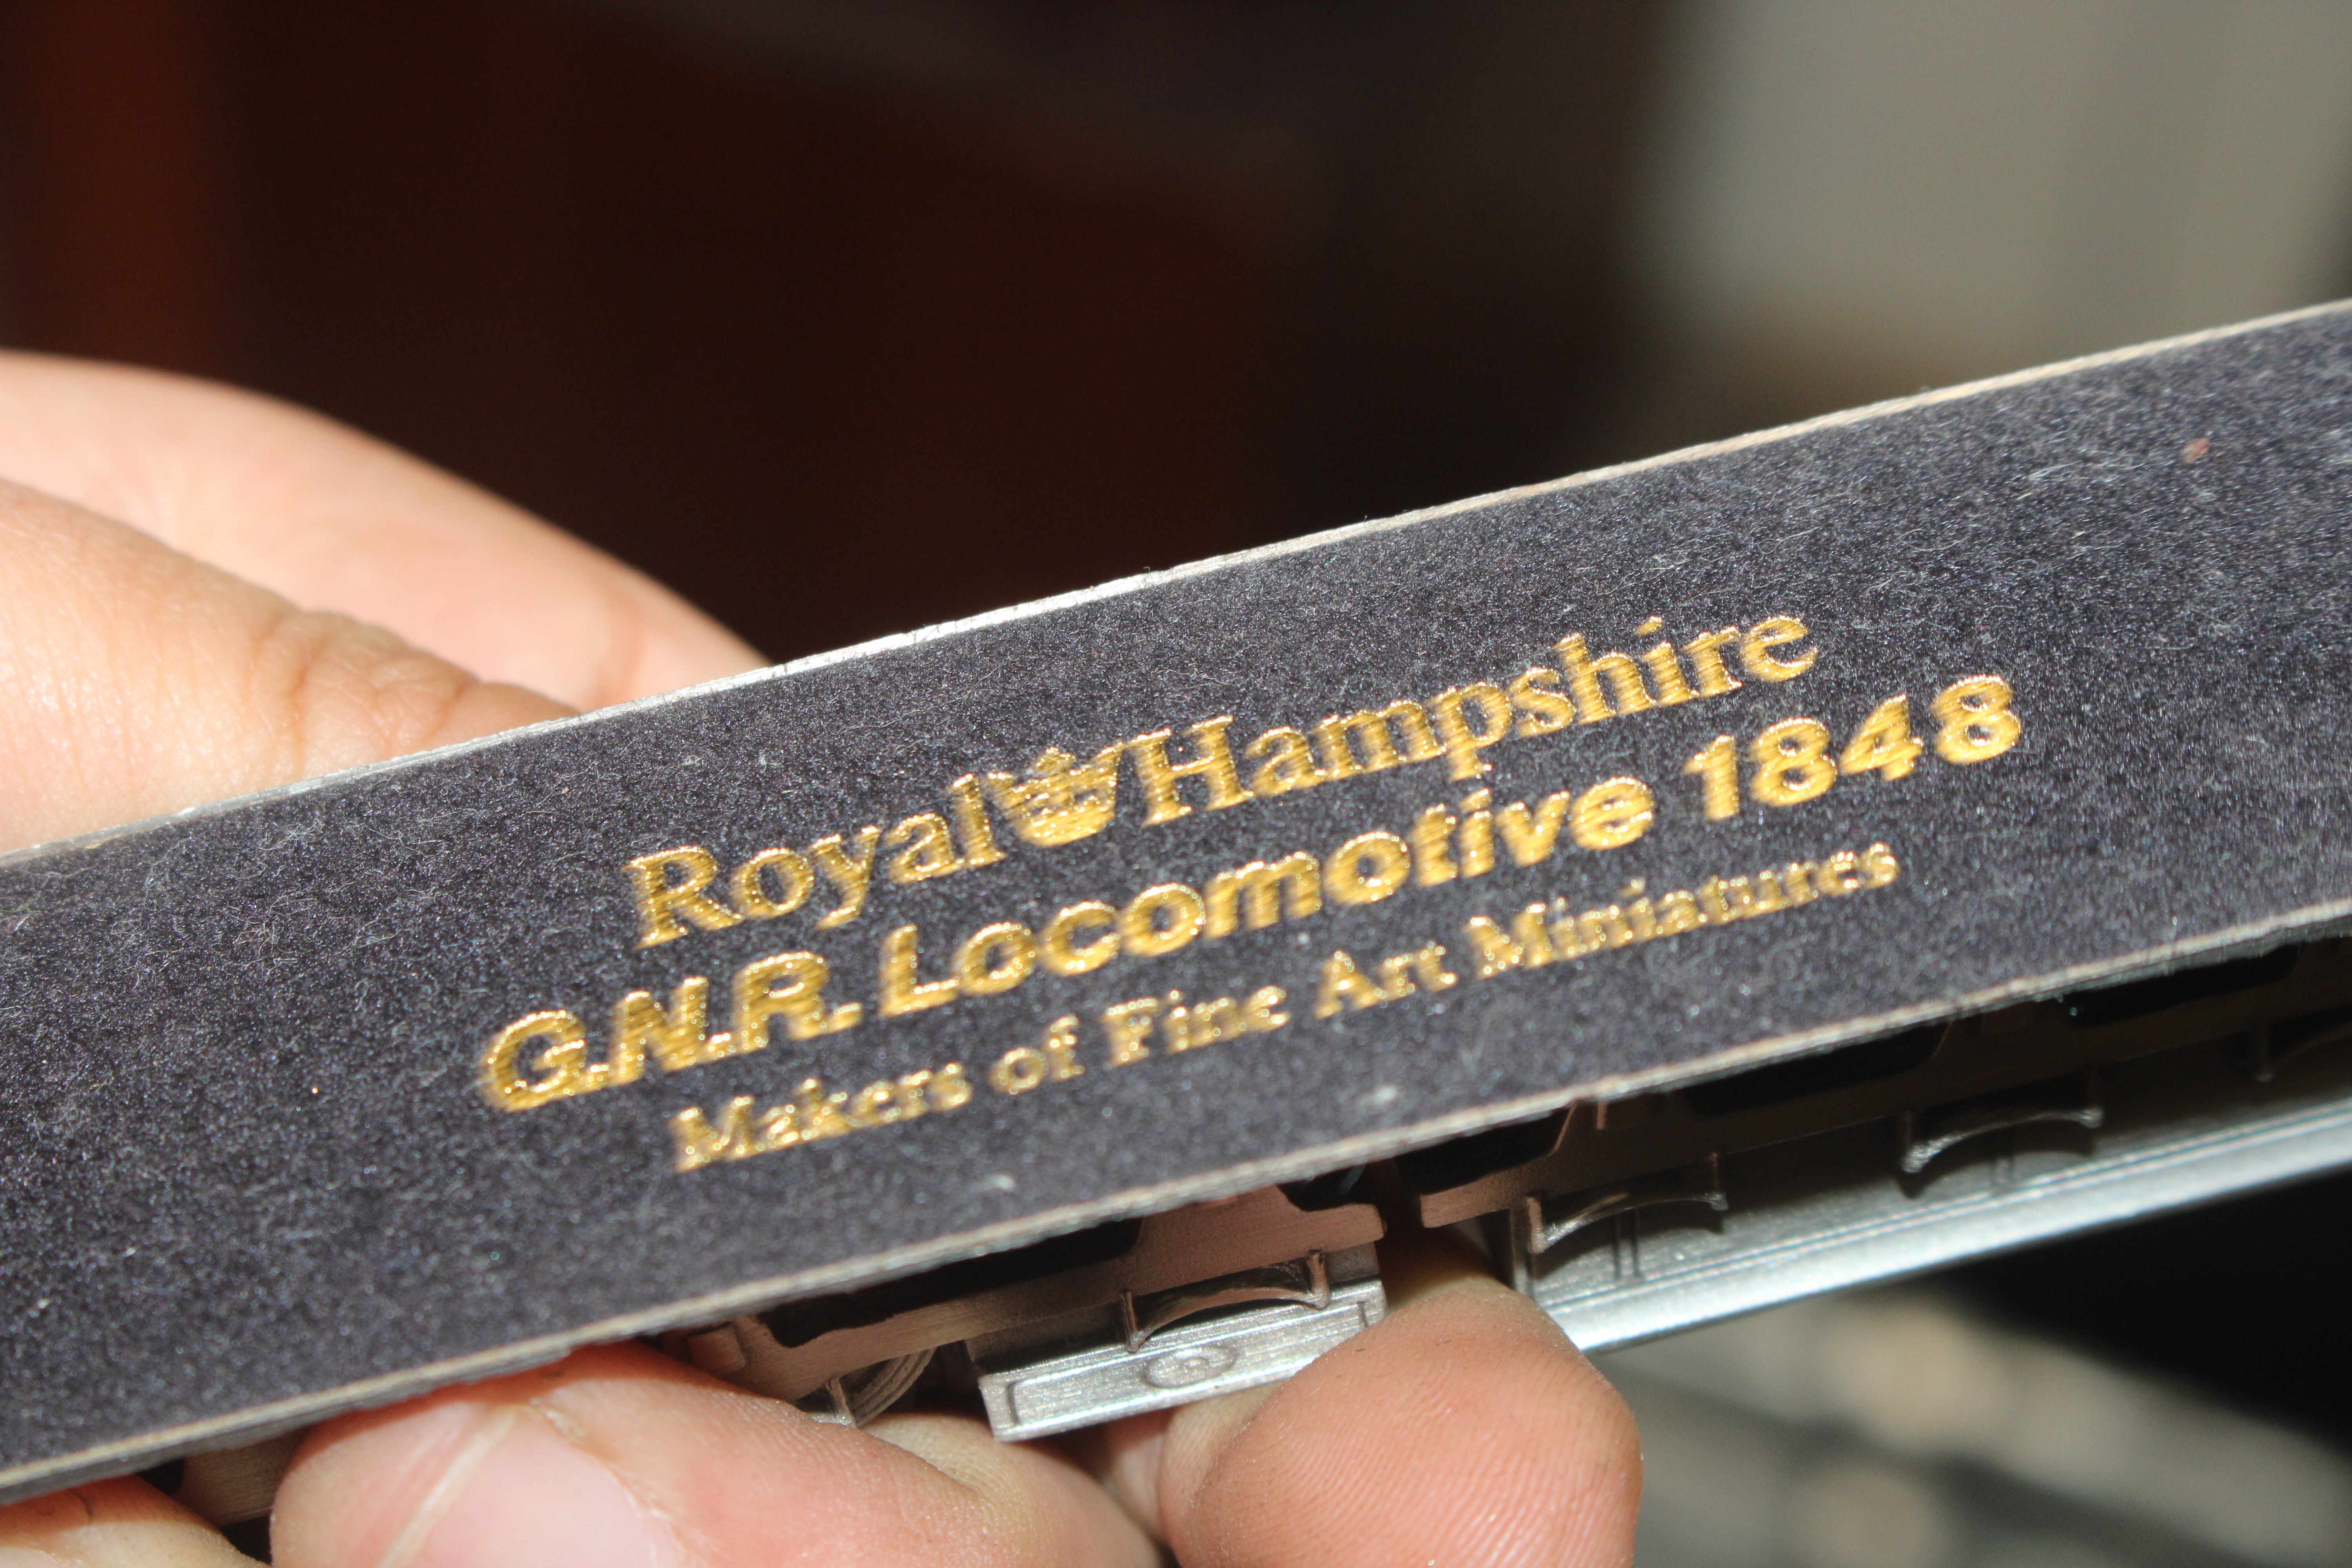 A quantity of Royal Hampshire World Greatest locom - Image 16 of 38